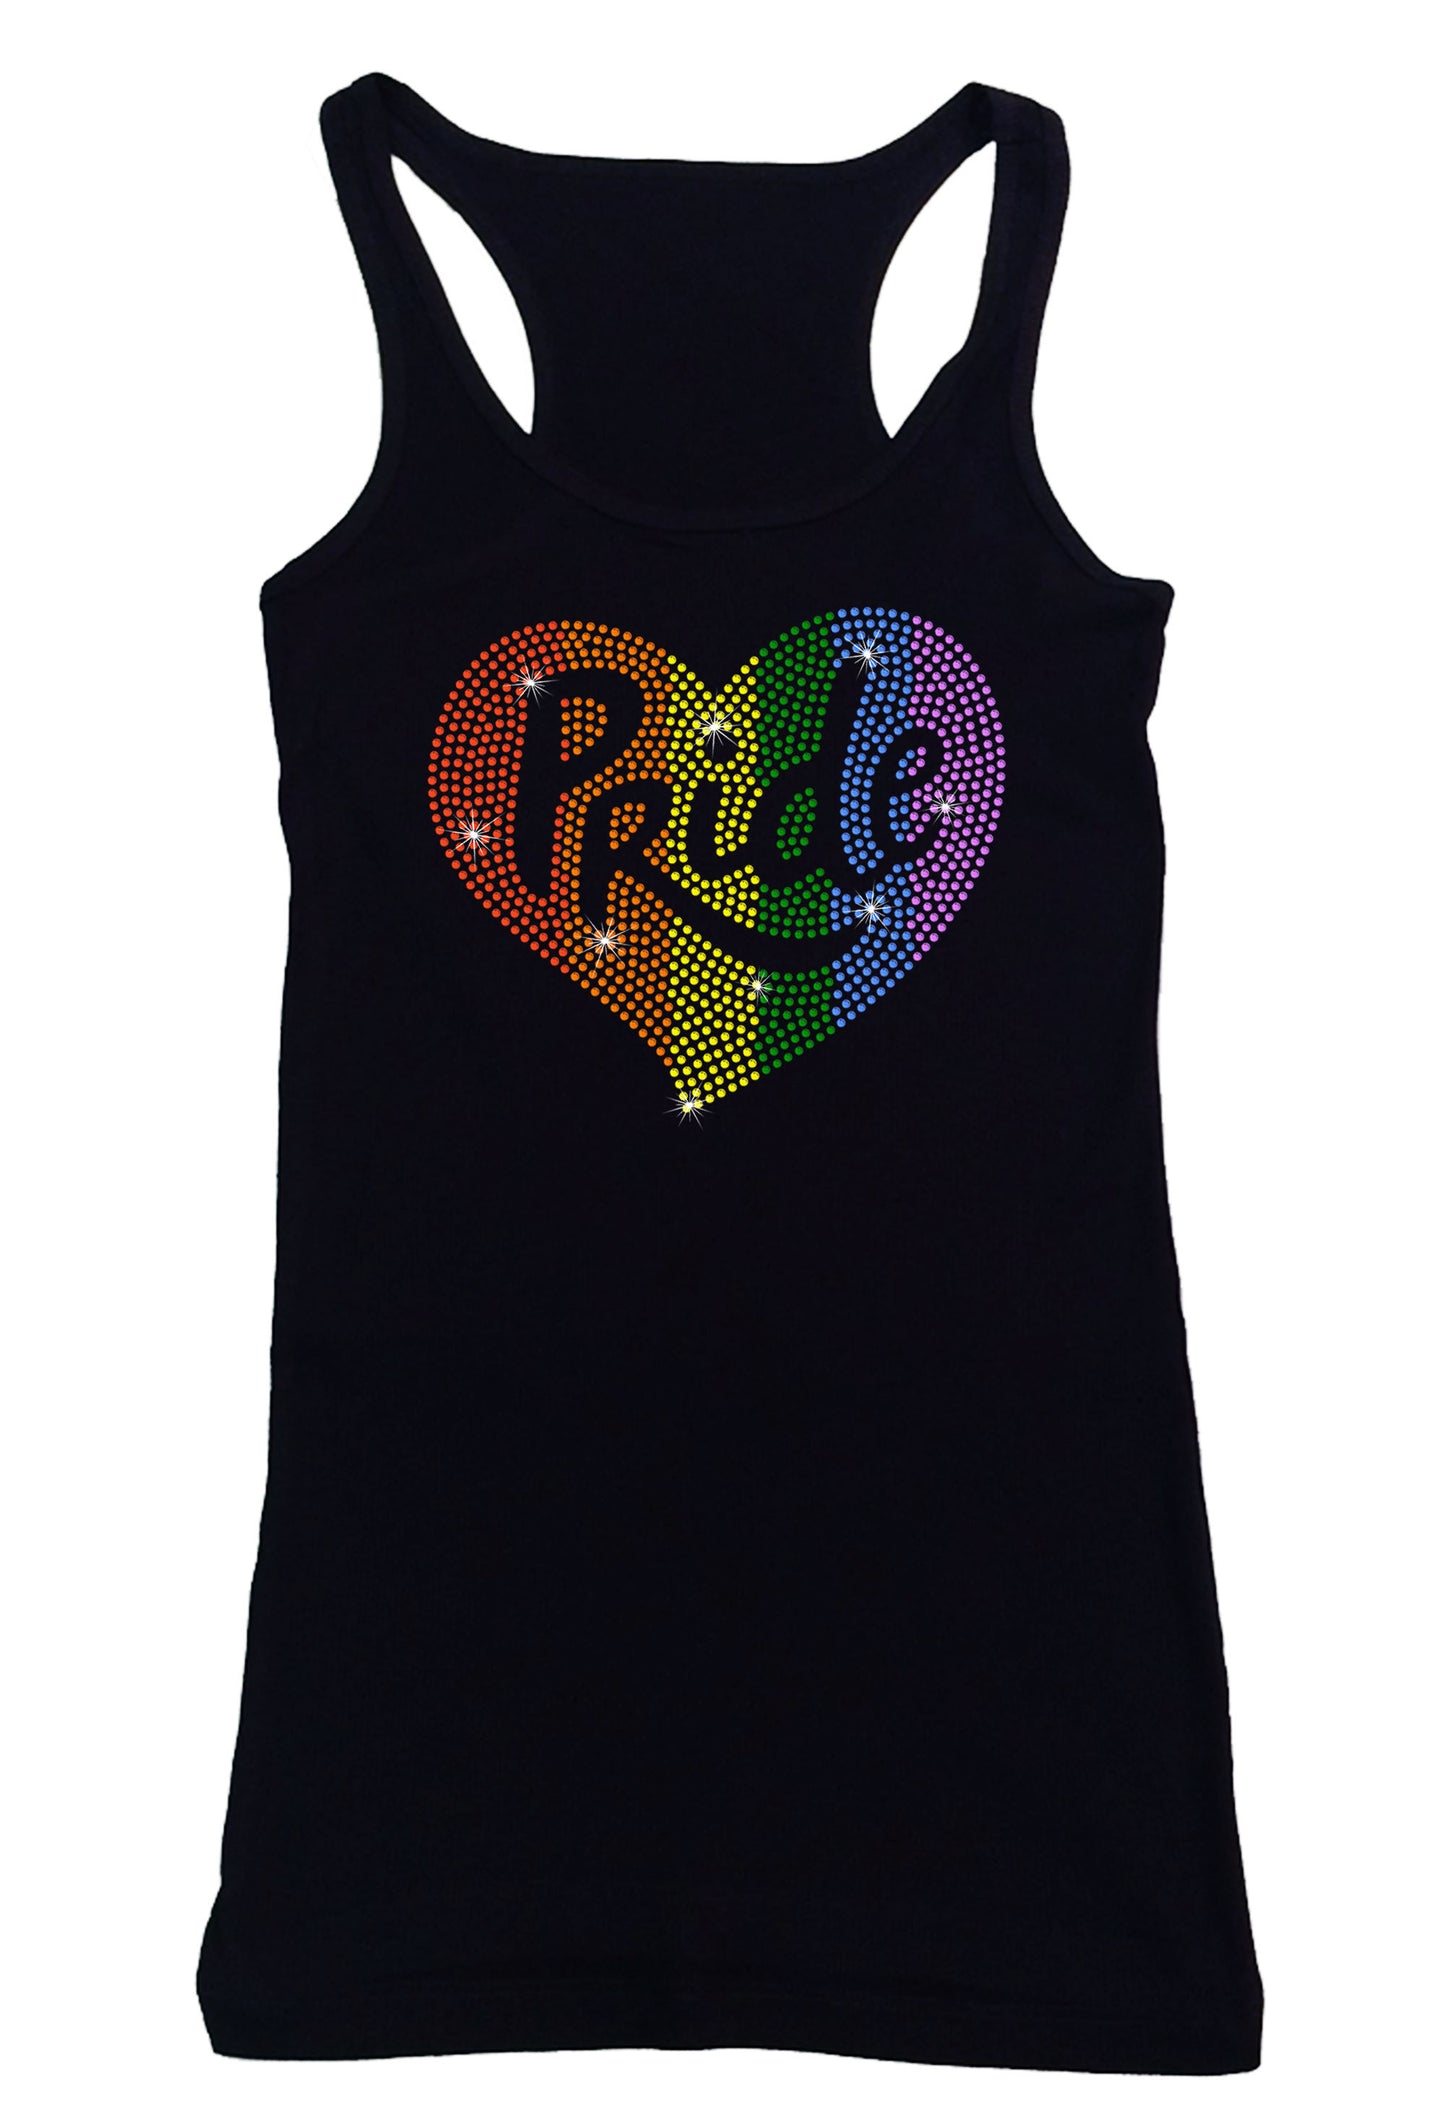 Women's Rhinestone Fitted Tight Snug Shirt Rainbow Pride Rainbow Heart - Rhinestone Pride Shirt